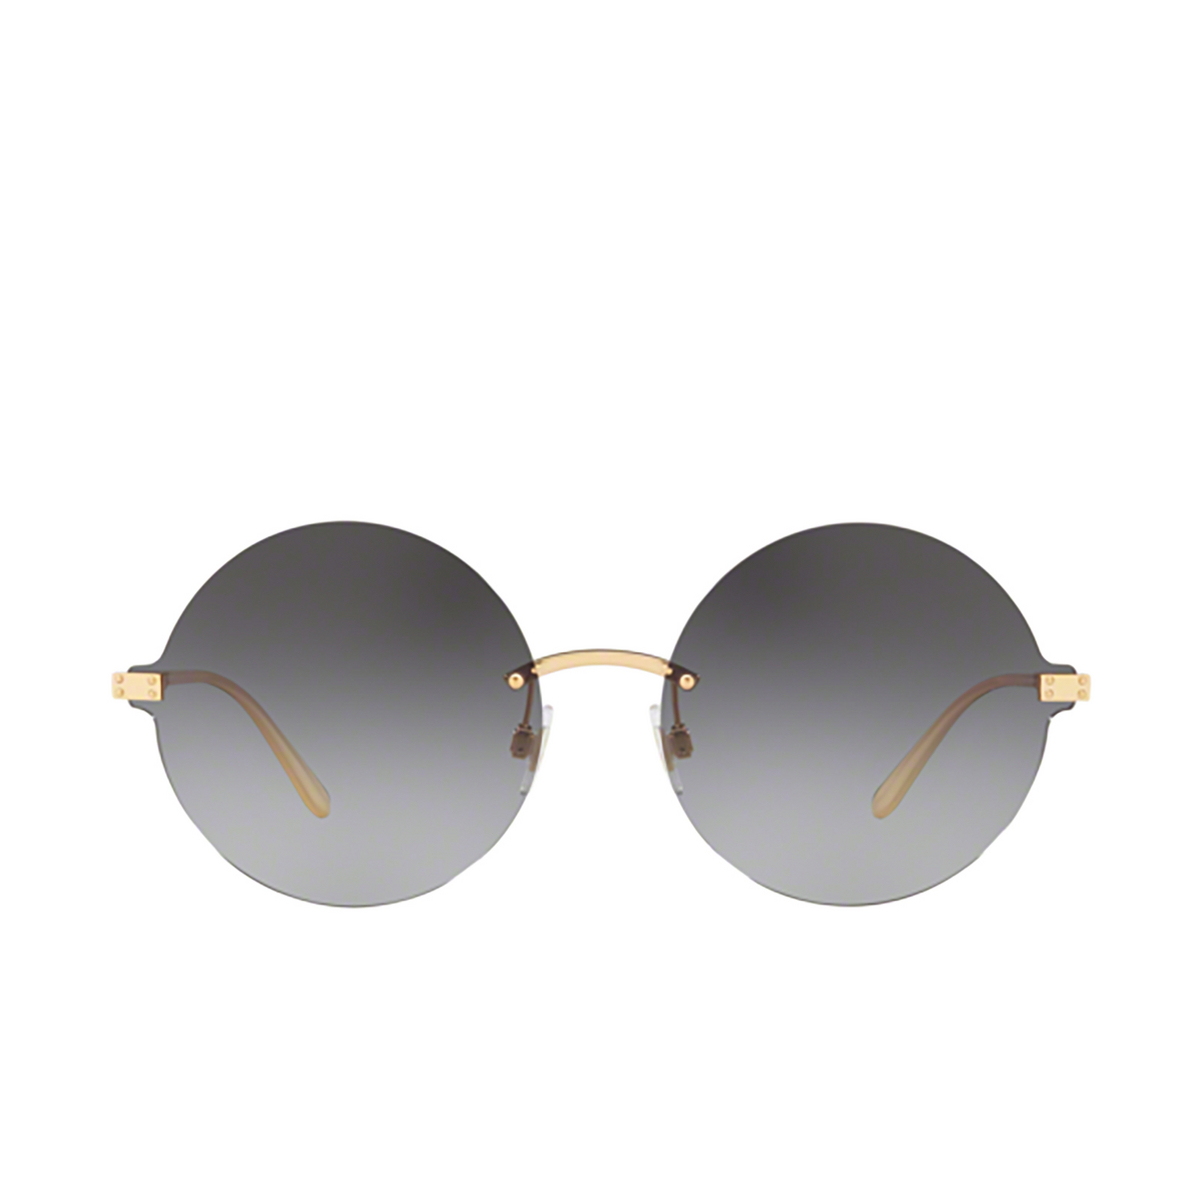 Dolce & Gabbana® Round Sunglasses: DG2228 color 02/8G Gold - 1/3